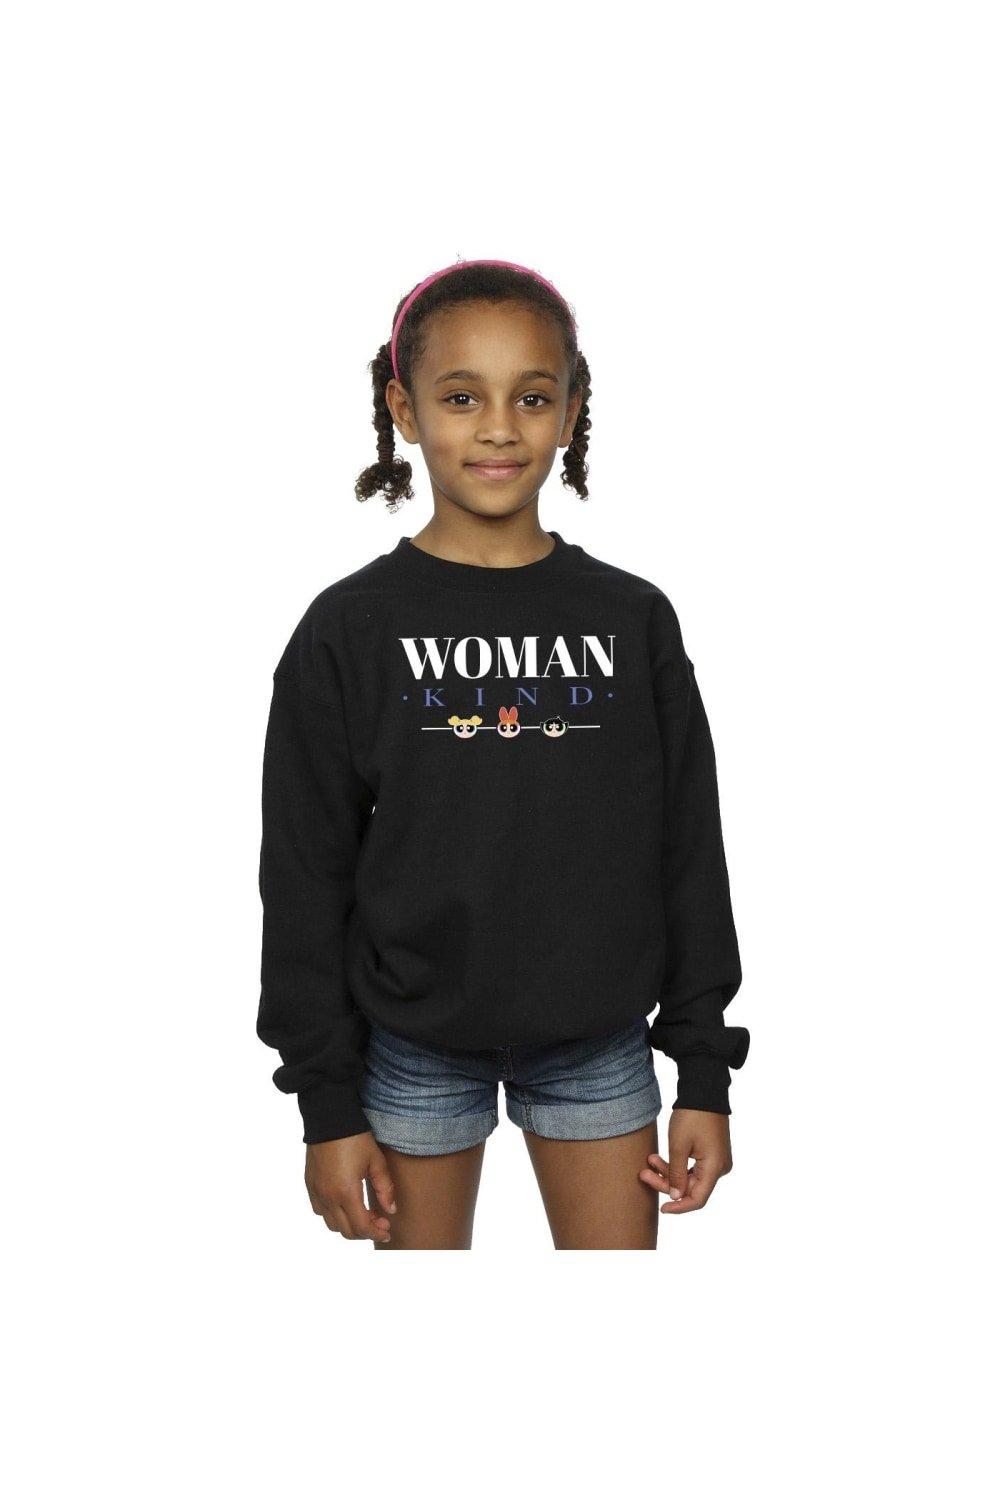 Woman Kind Sweatshirt